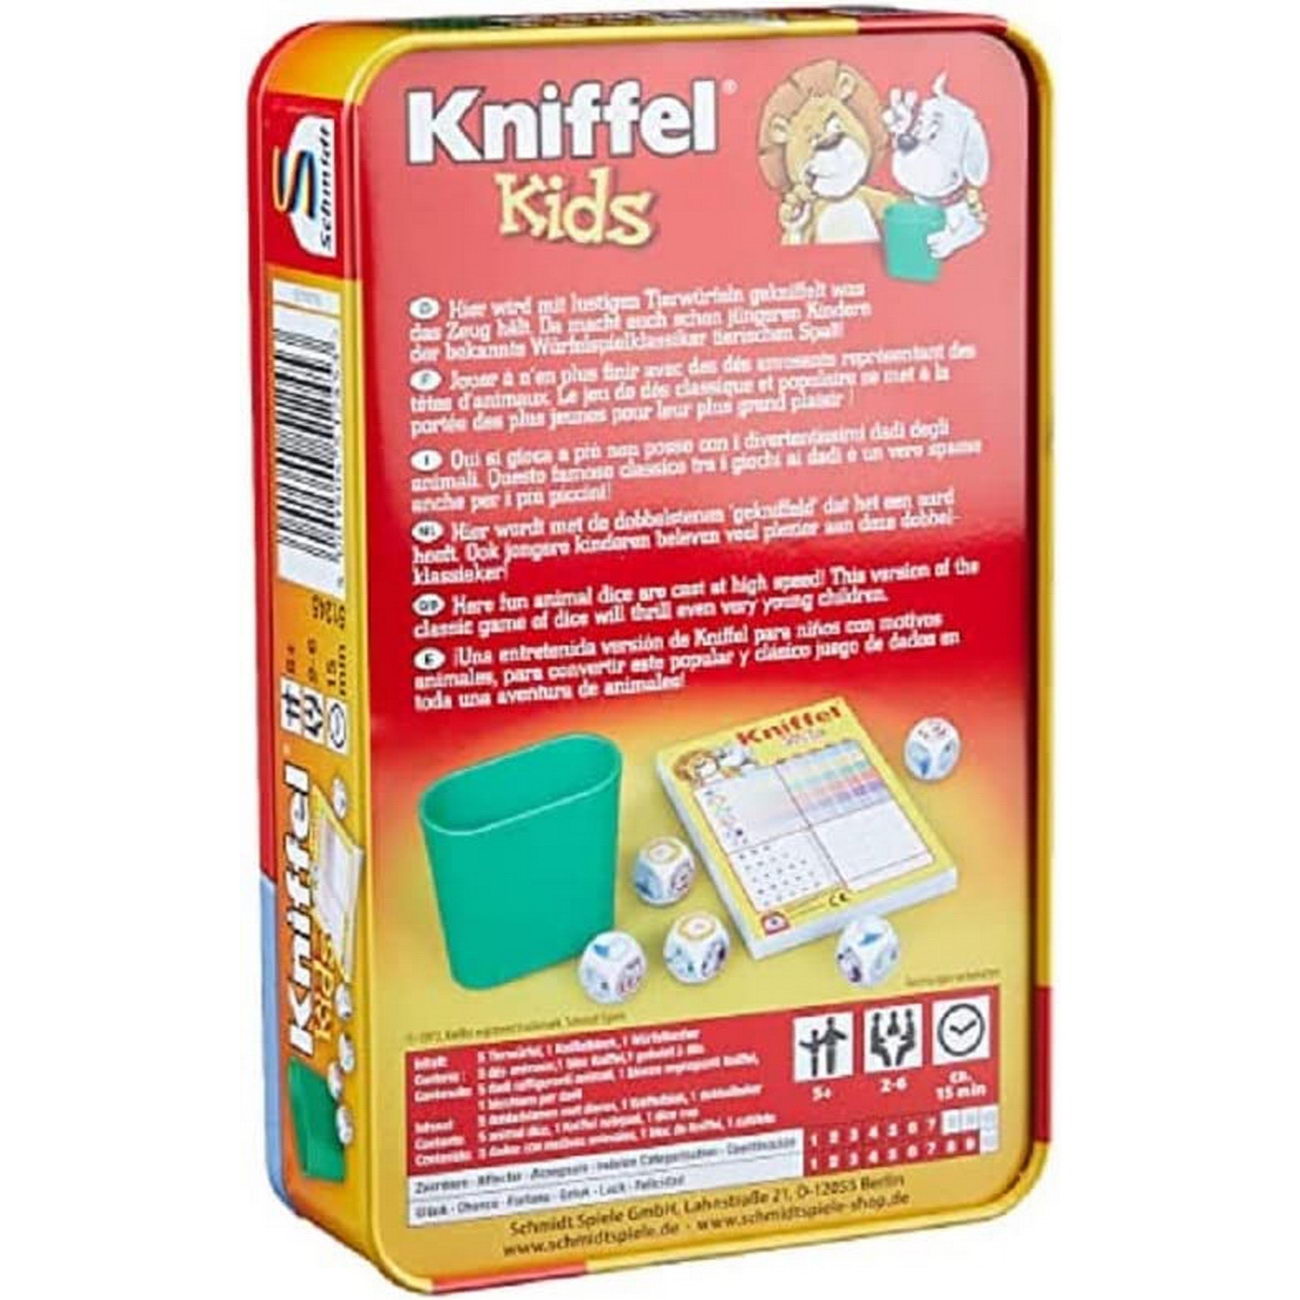 Kniffel Kids Reisespiel Metalldose (Schmidt 51245)